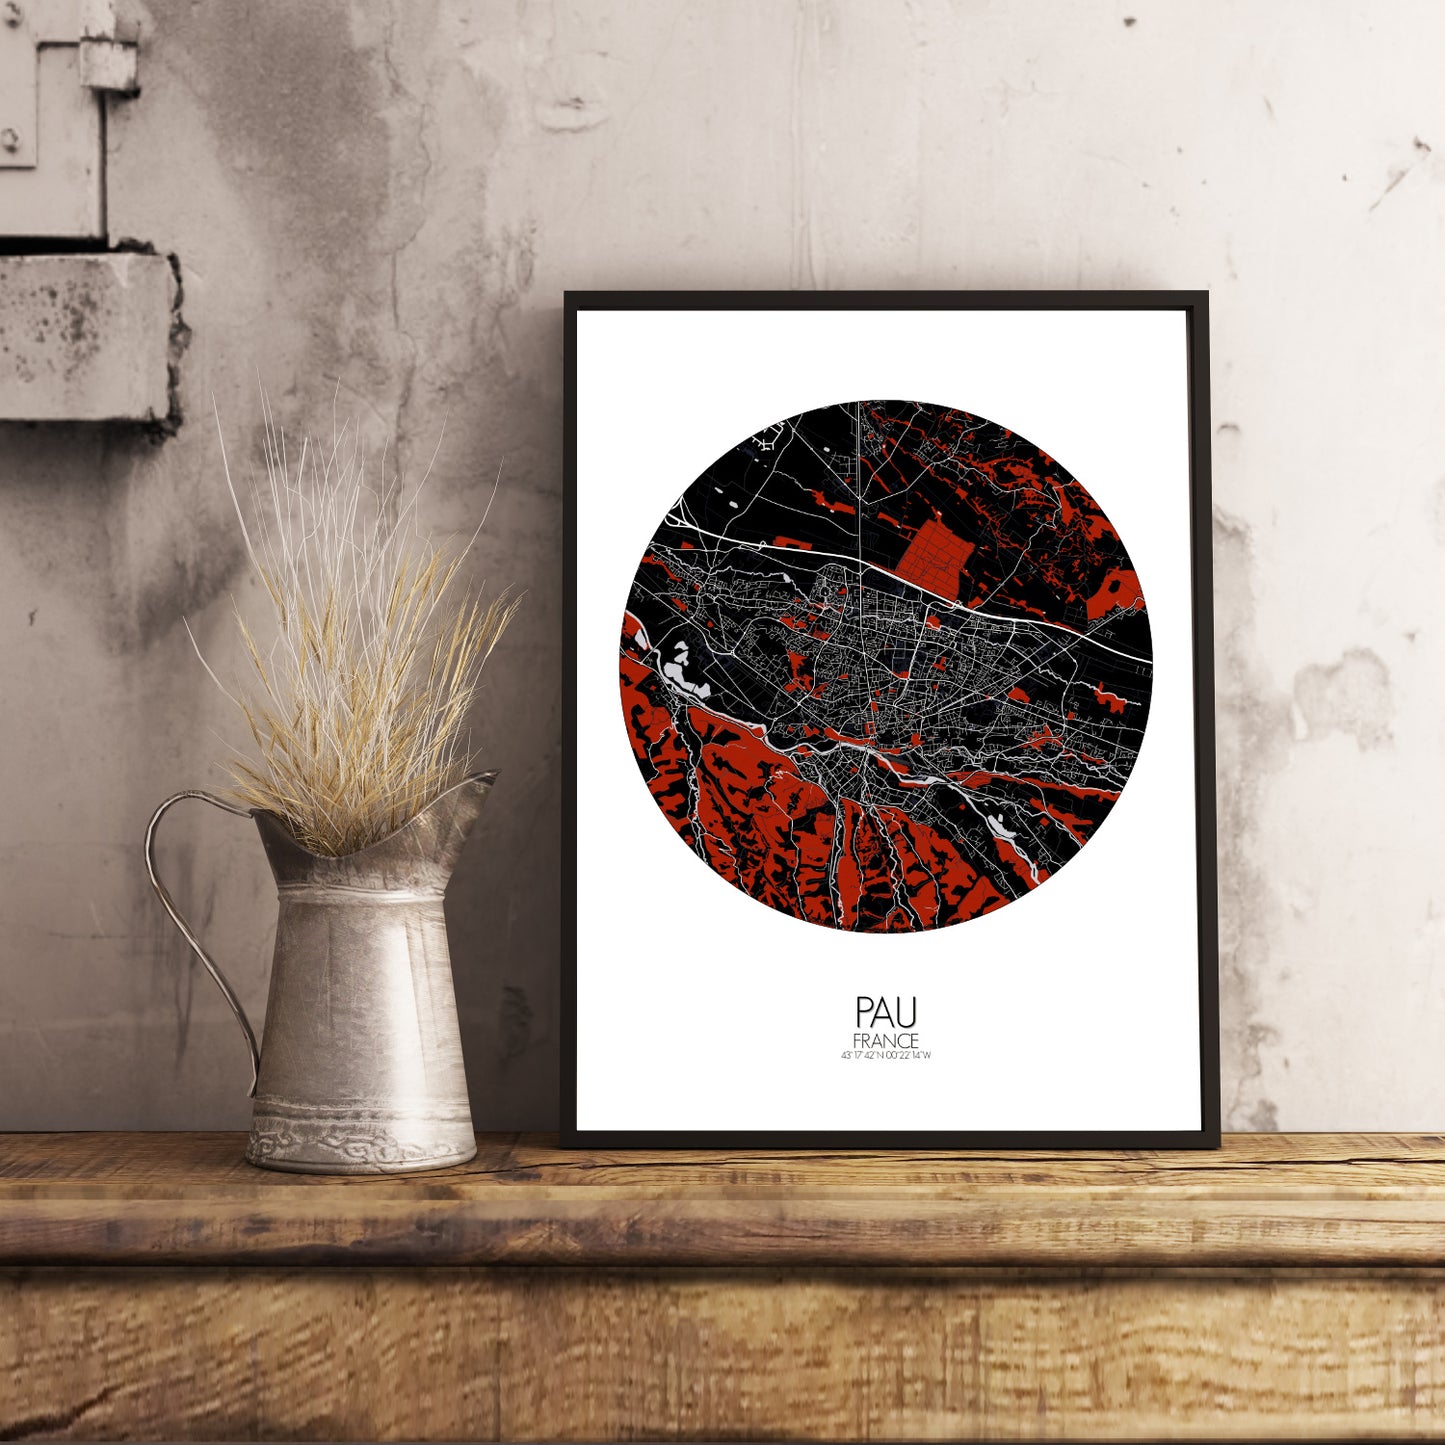 Pau Red dark round shape design poster city map